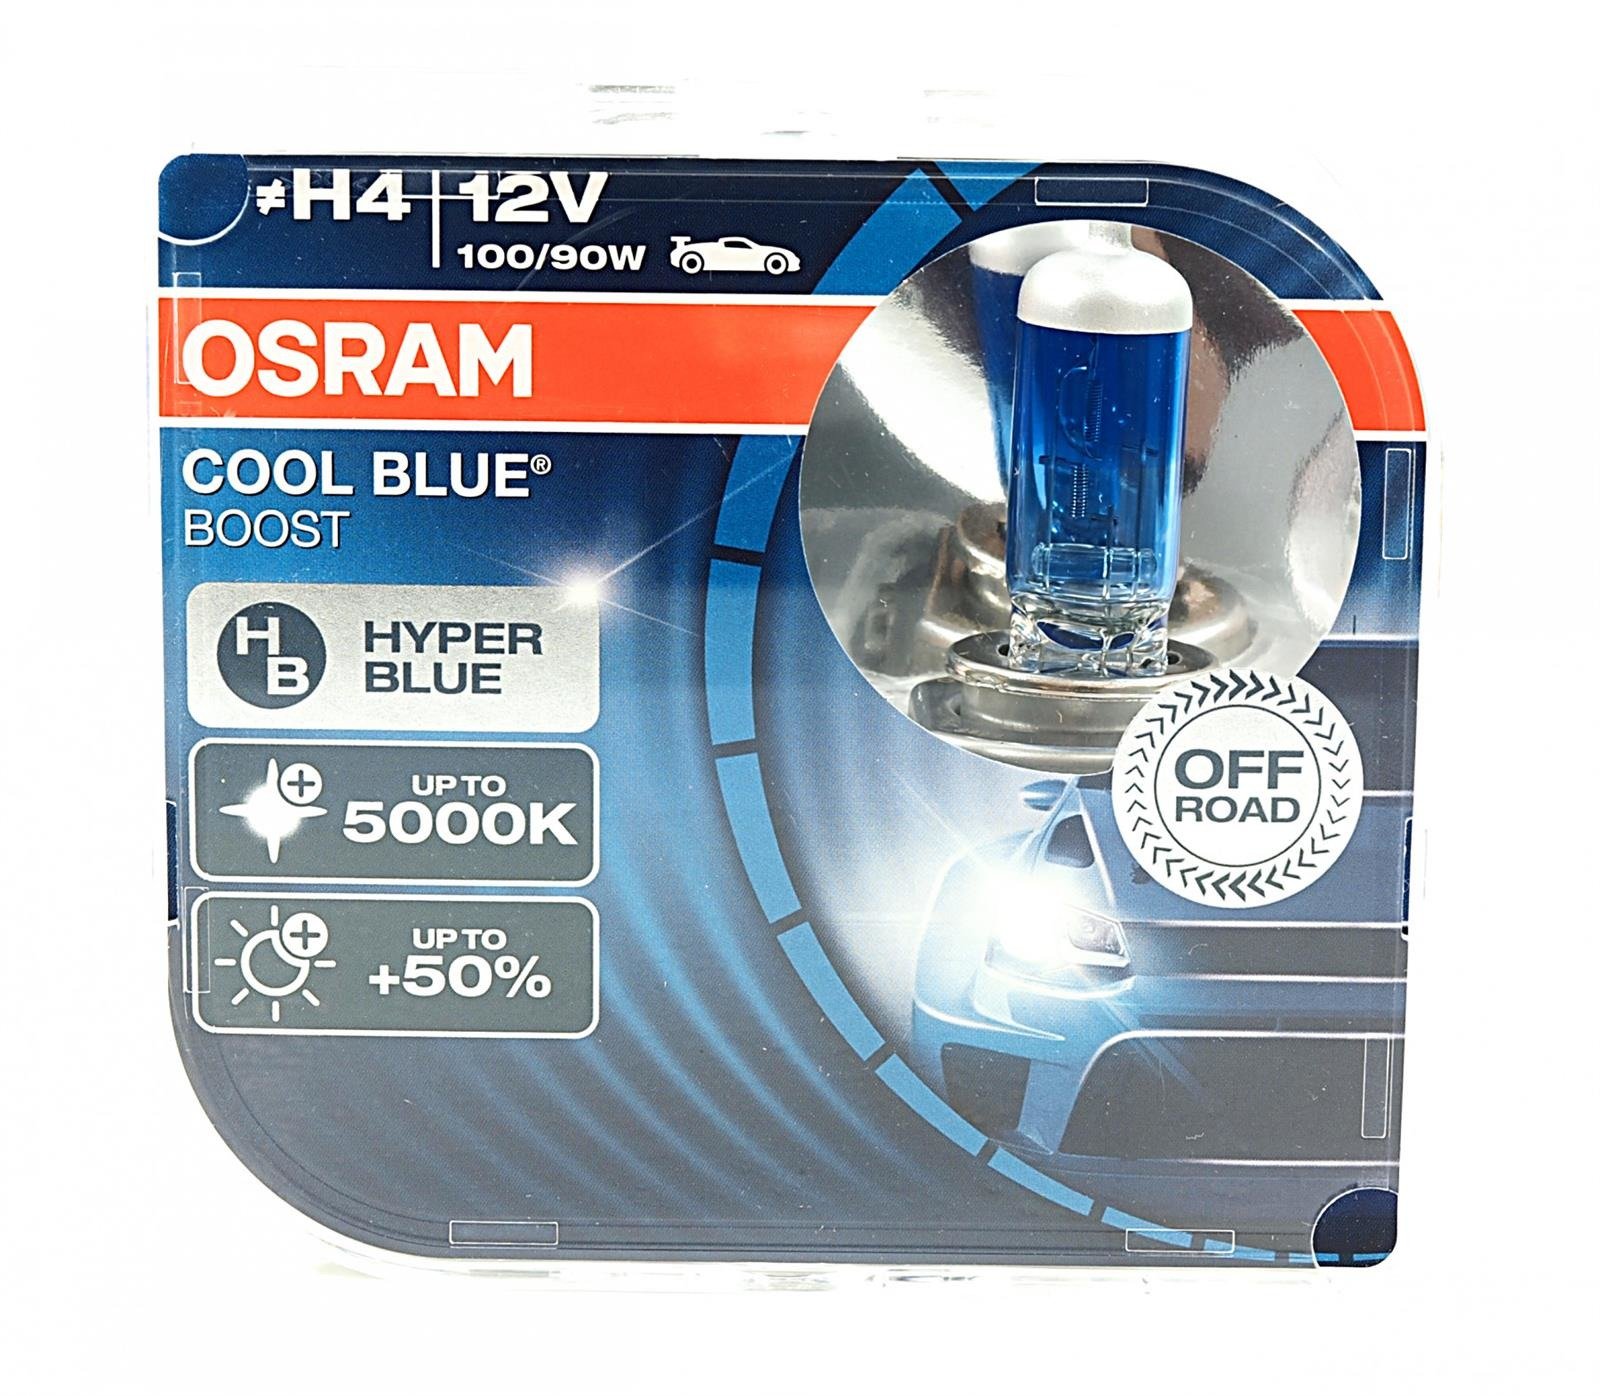 H4 12V 100/90W P43t COOL BLUE BOOST 5000K +50% 2pcs Osram